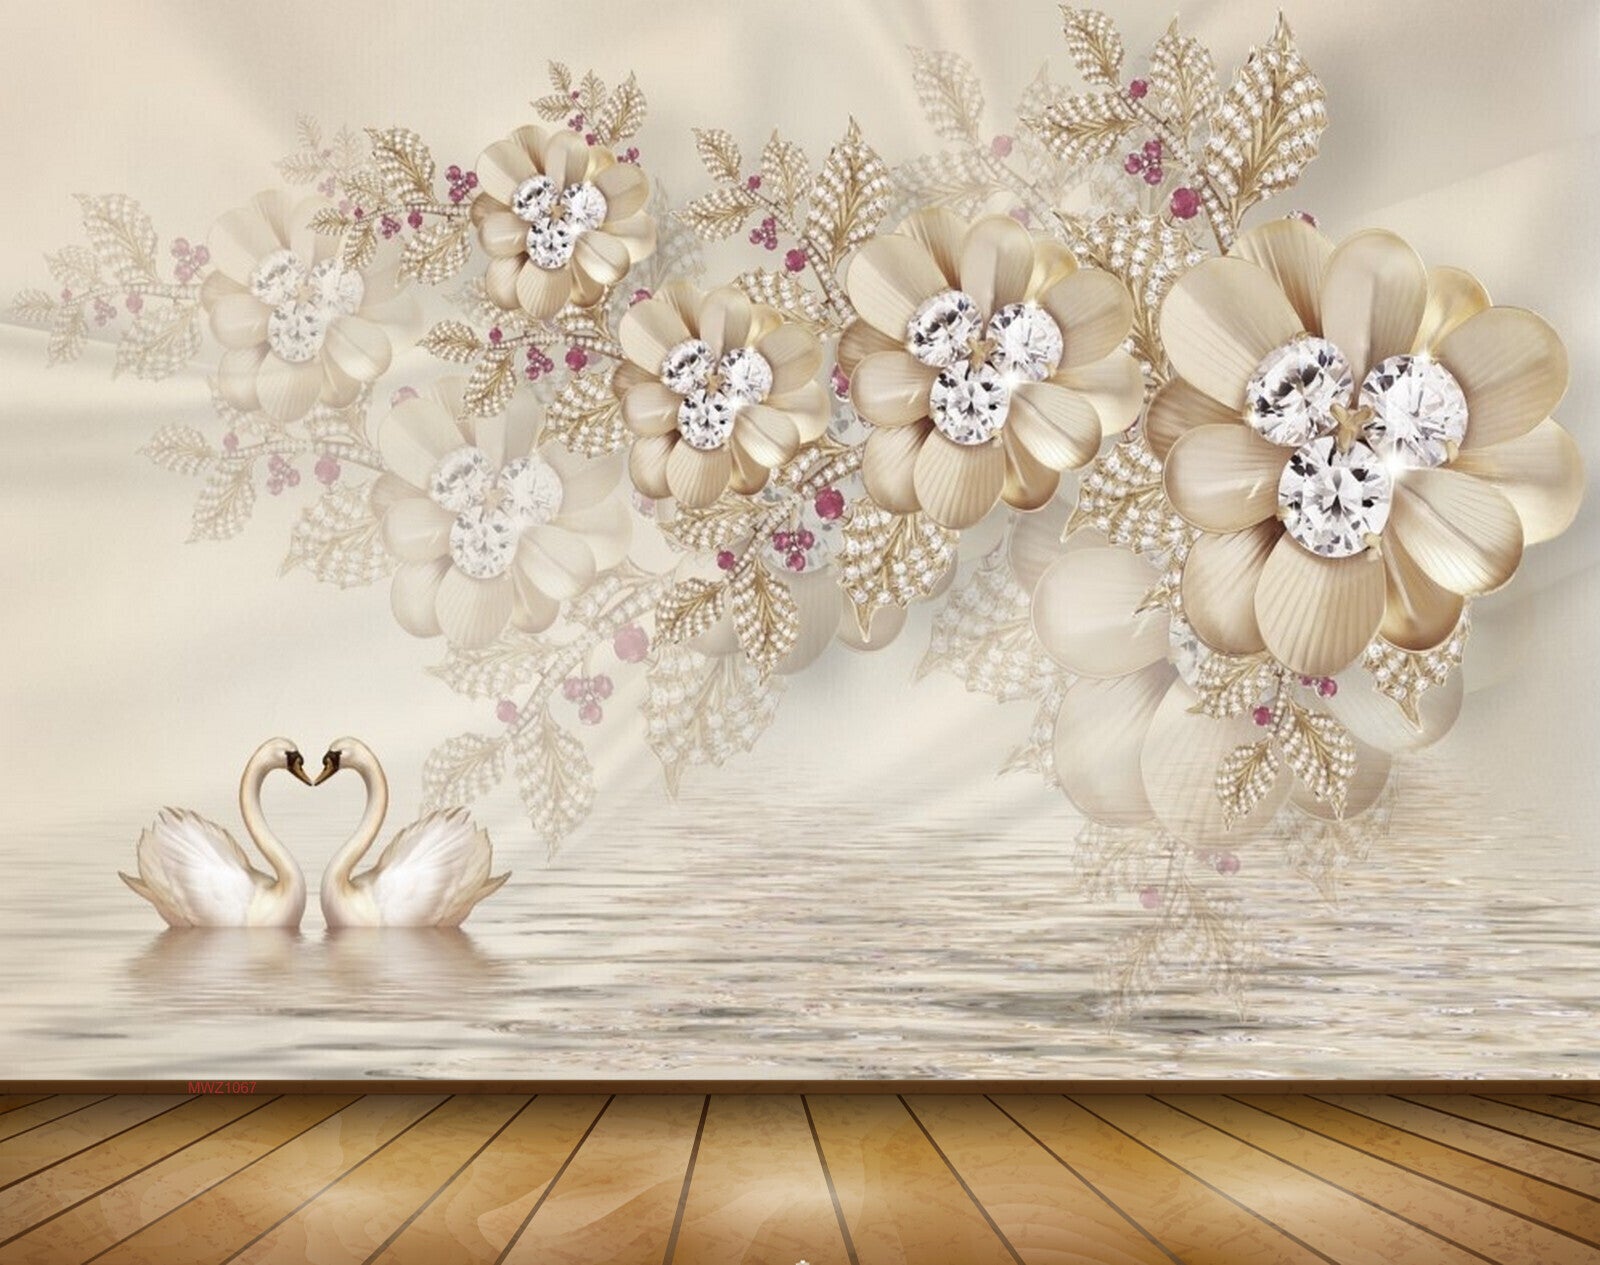 Avikalp MWZ1067 Golden Flowers Swans leaves 3D HD Wallpaper